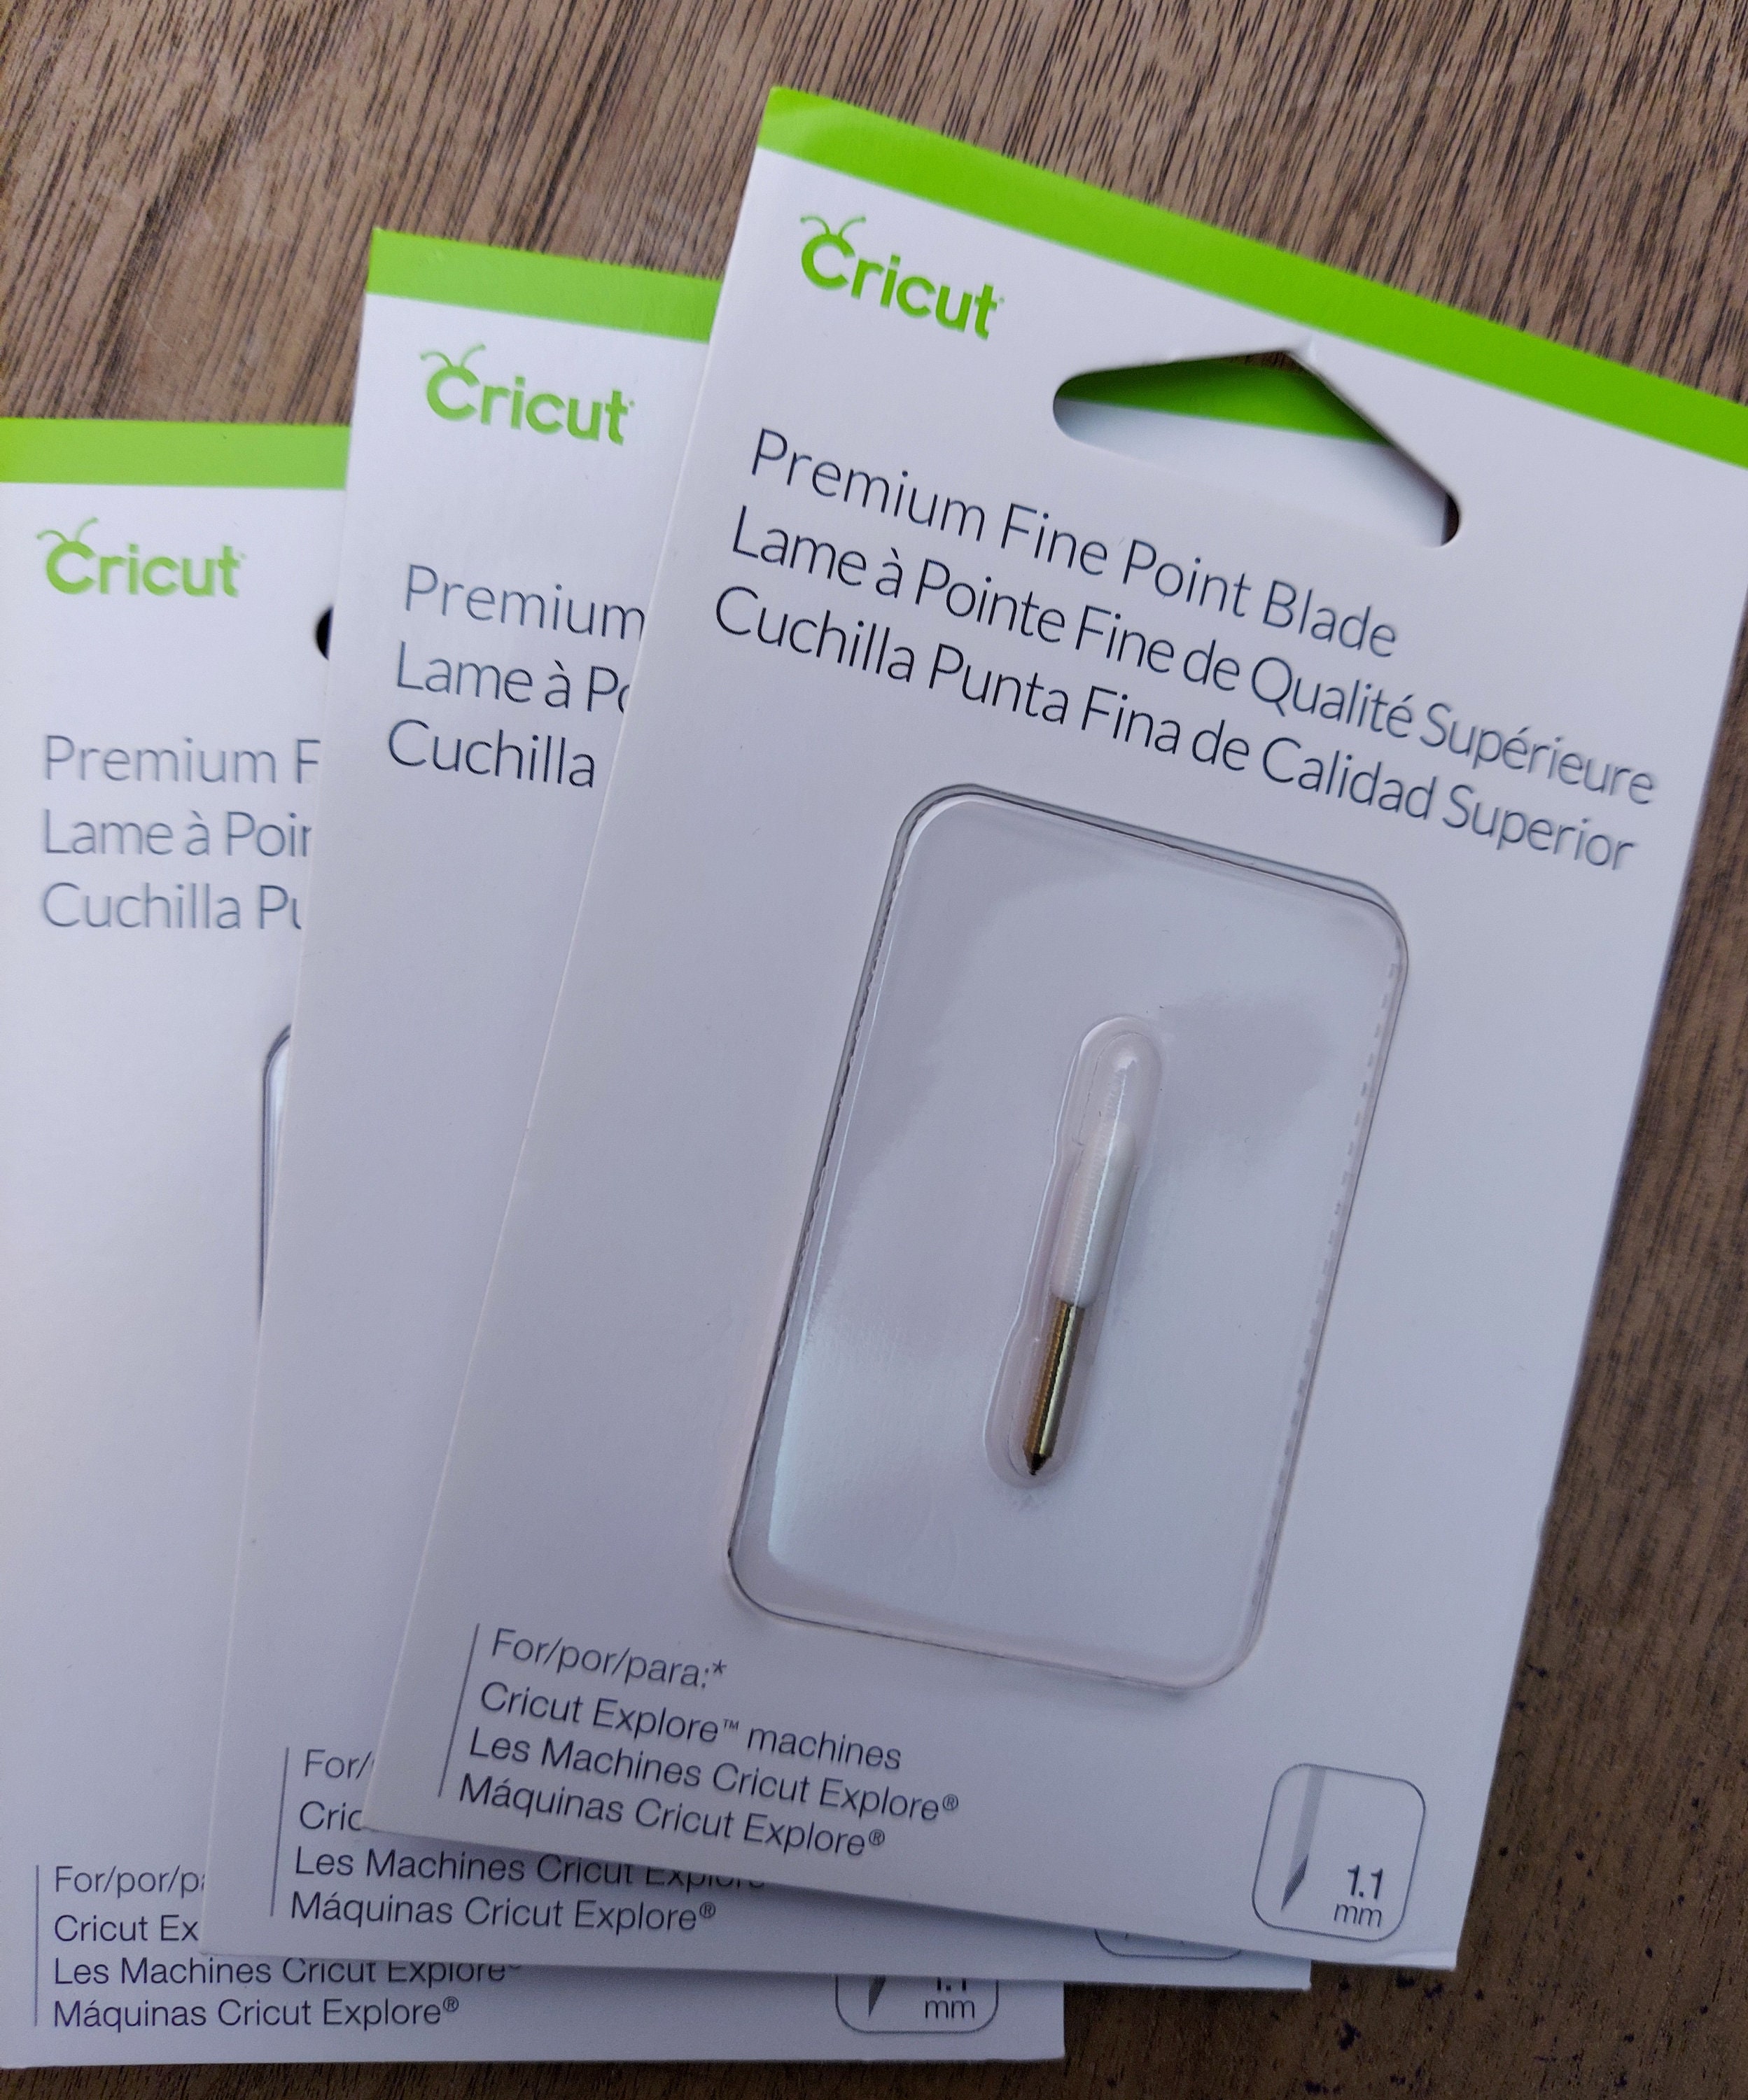 Cricut Explore Premium Fine Point Blade 1.1 mm by Provo Craft